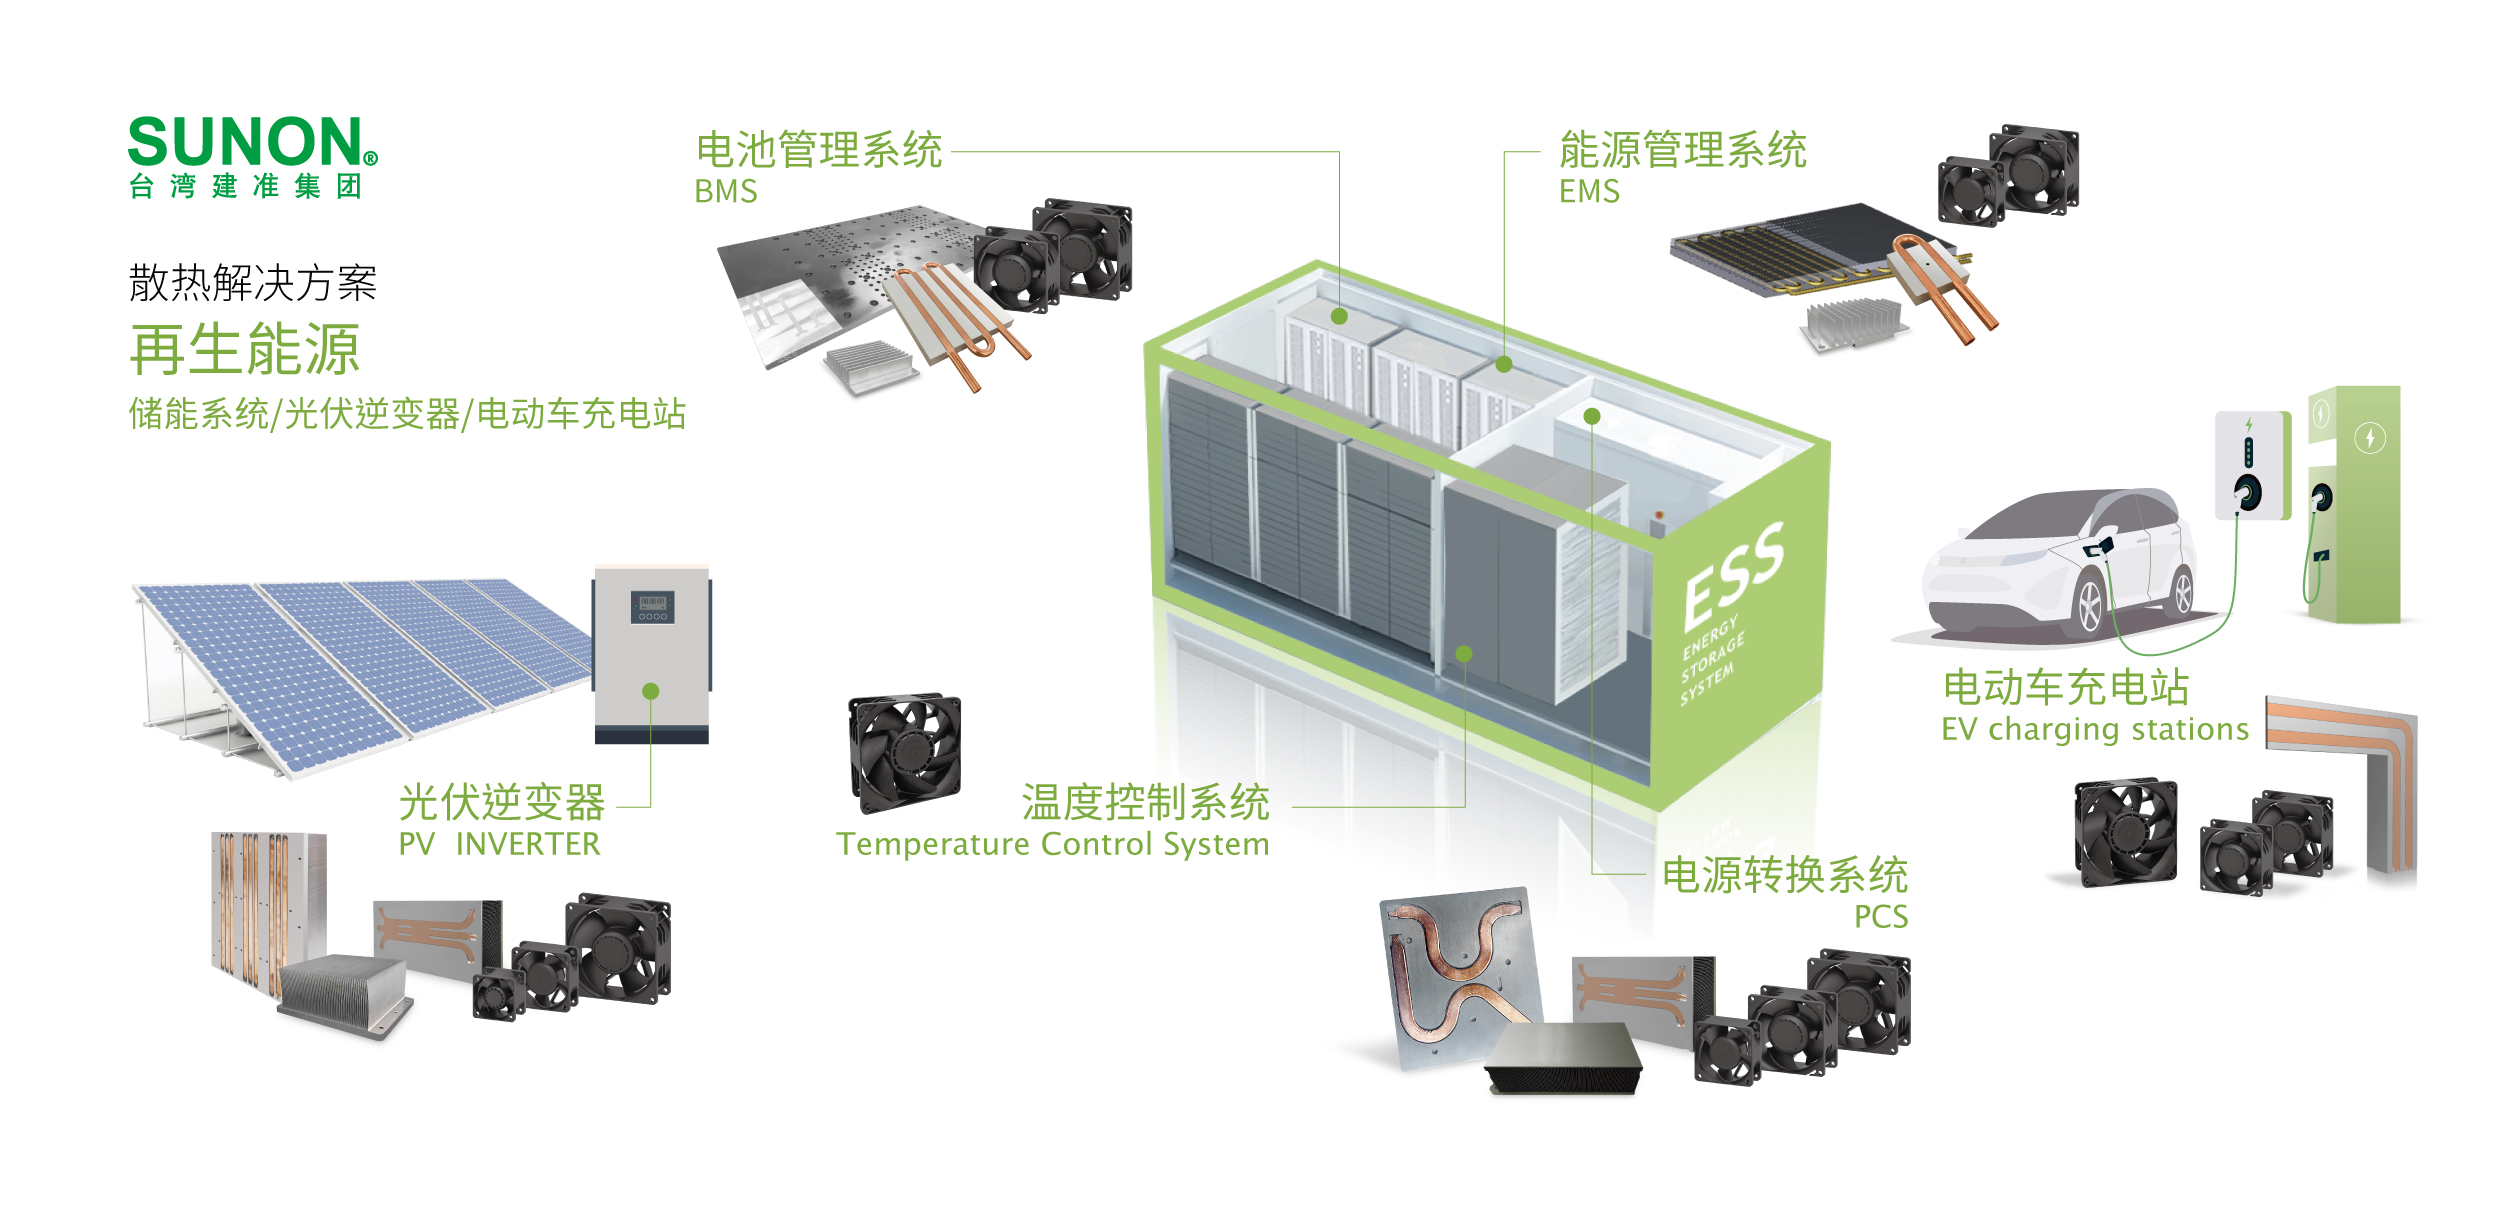 SUNON风扇-光伏储能系统散热风扇-SUNON风扇，IGBT模块，LEM传感器，授权代理商--武汉新瑞科